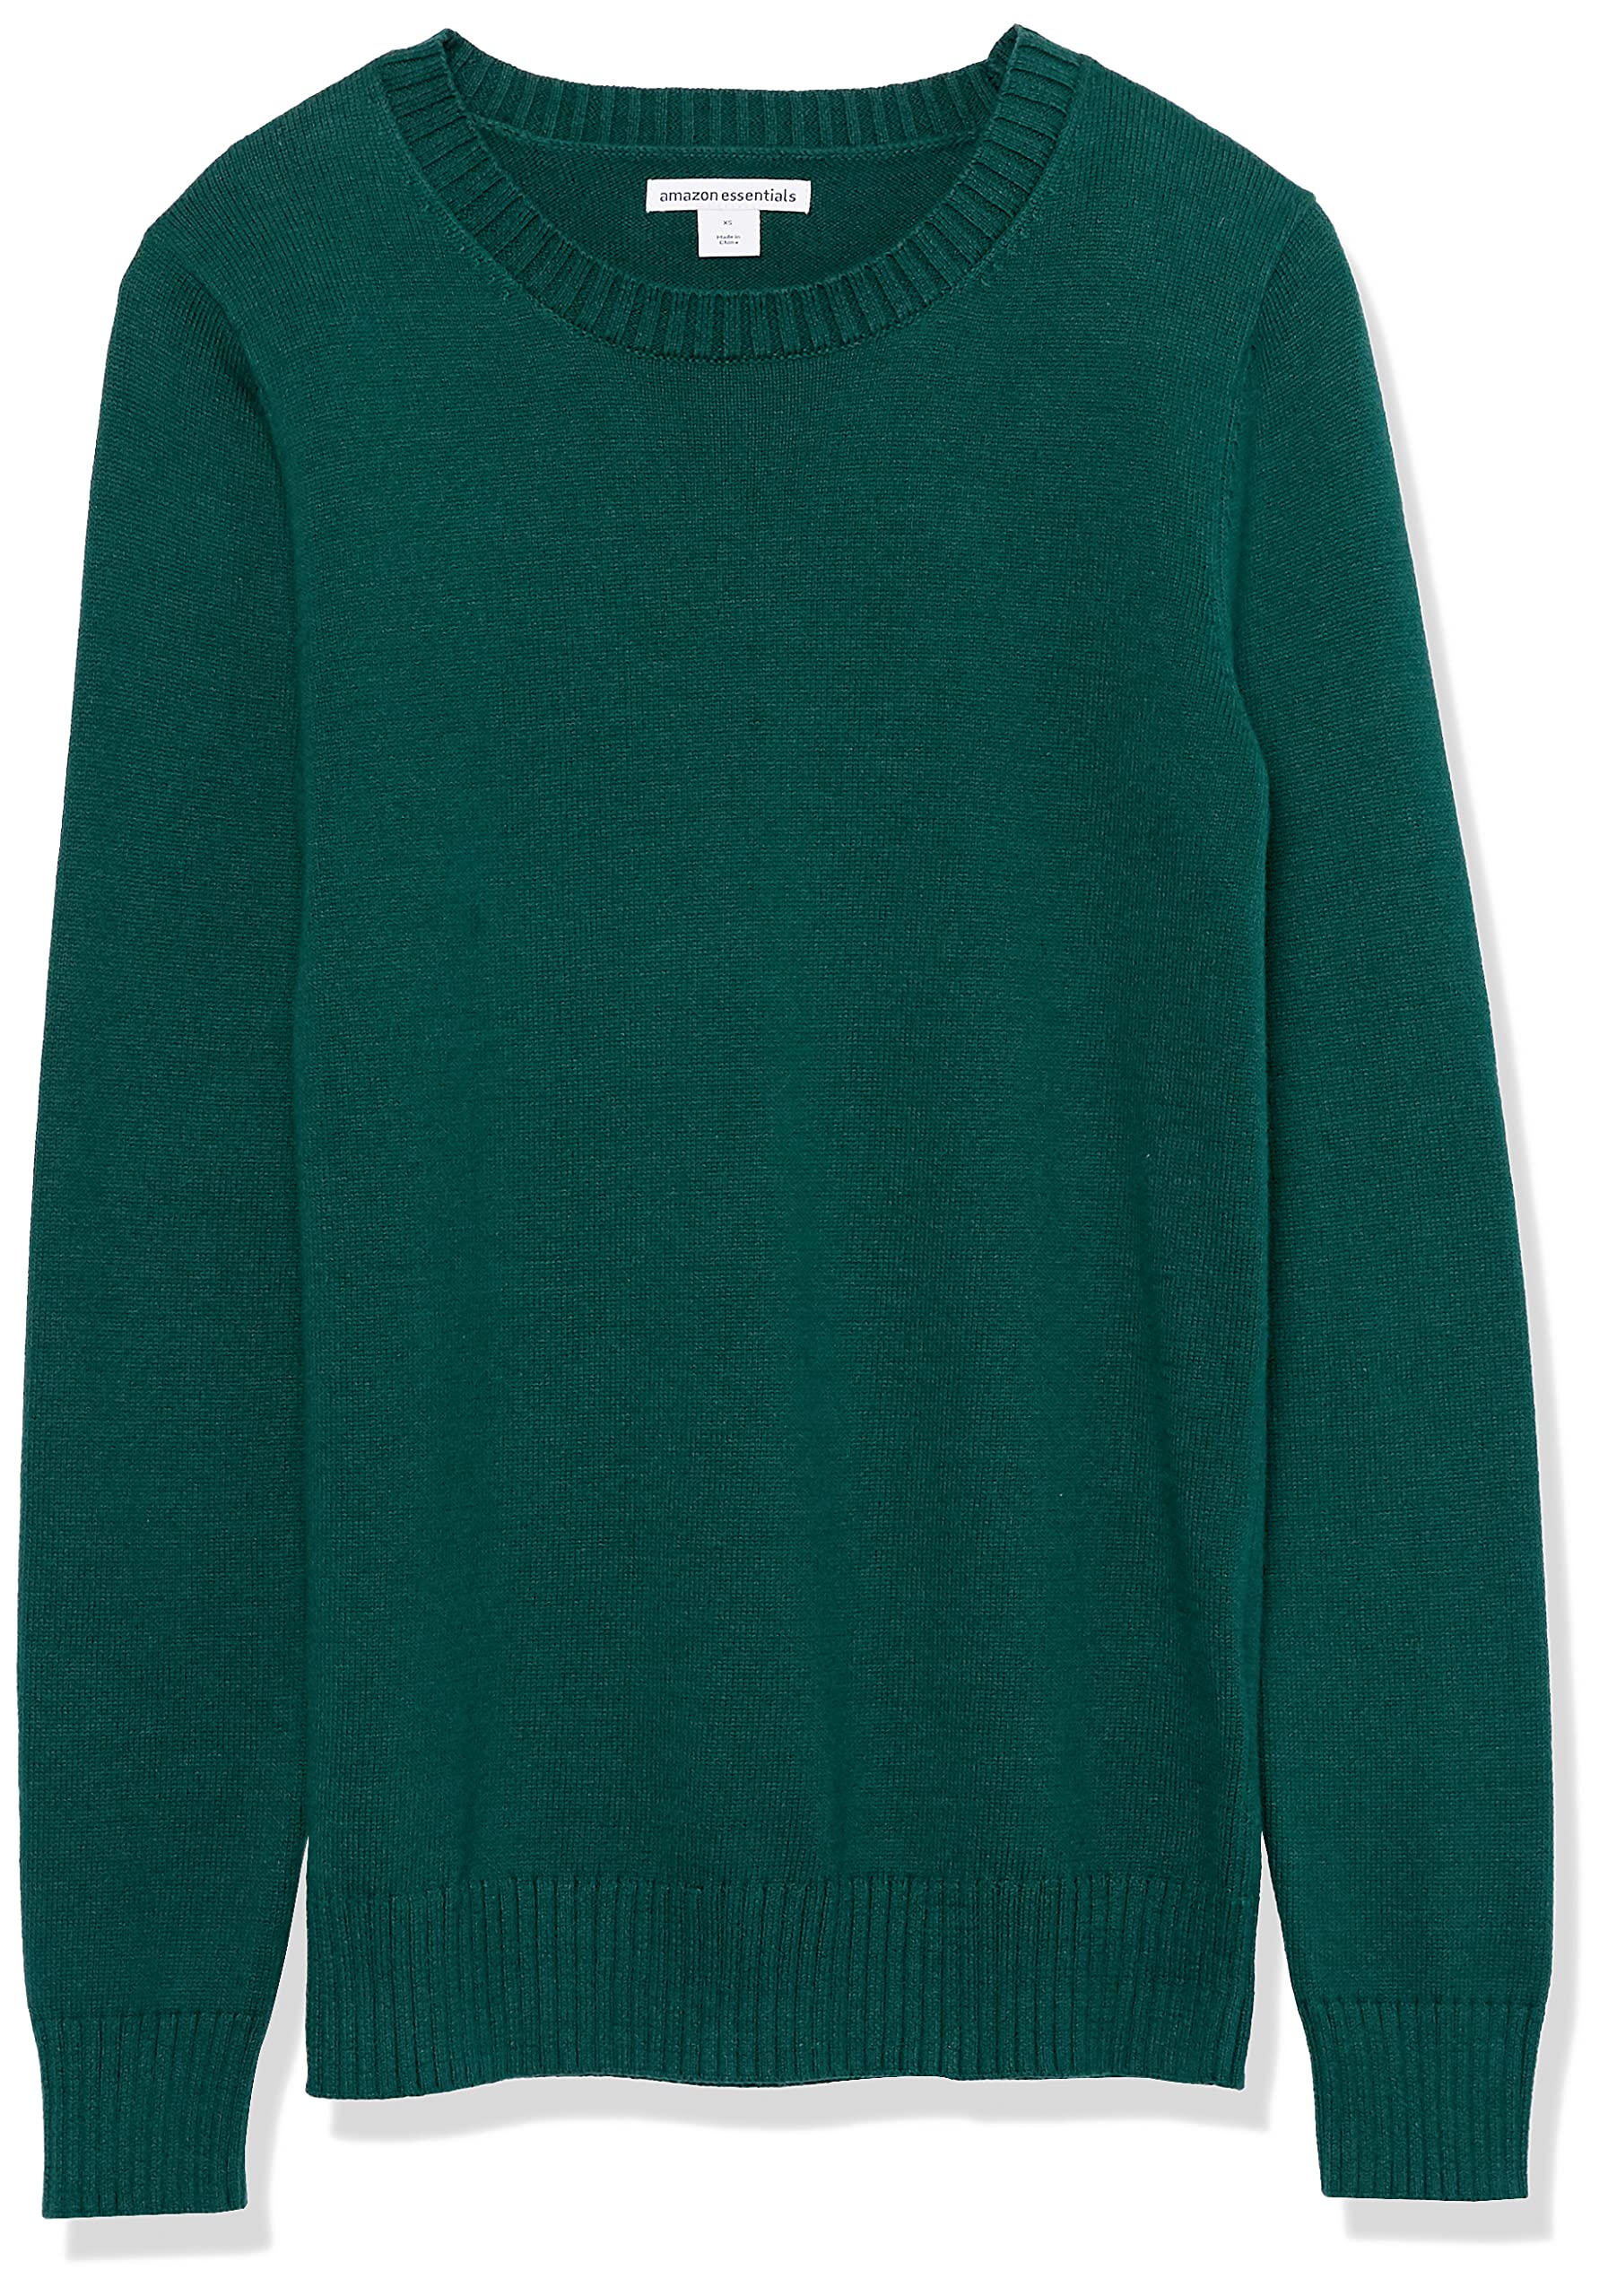 Amazon Essentials Women's 100% Cotton Crewneck Sweater (Available in Plus Size)